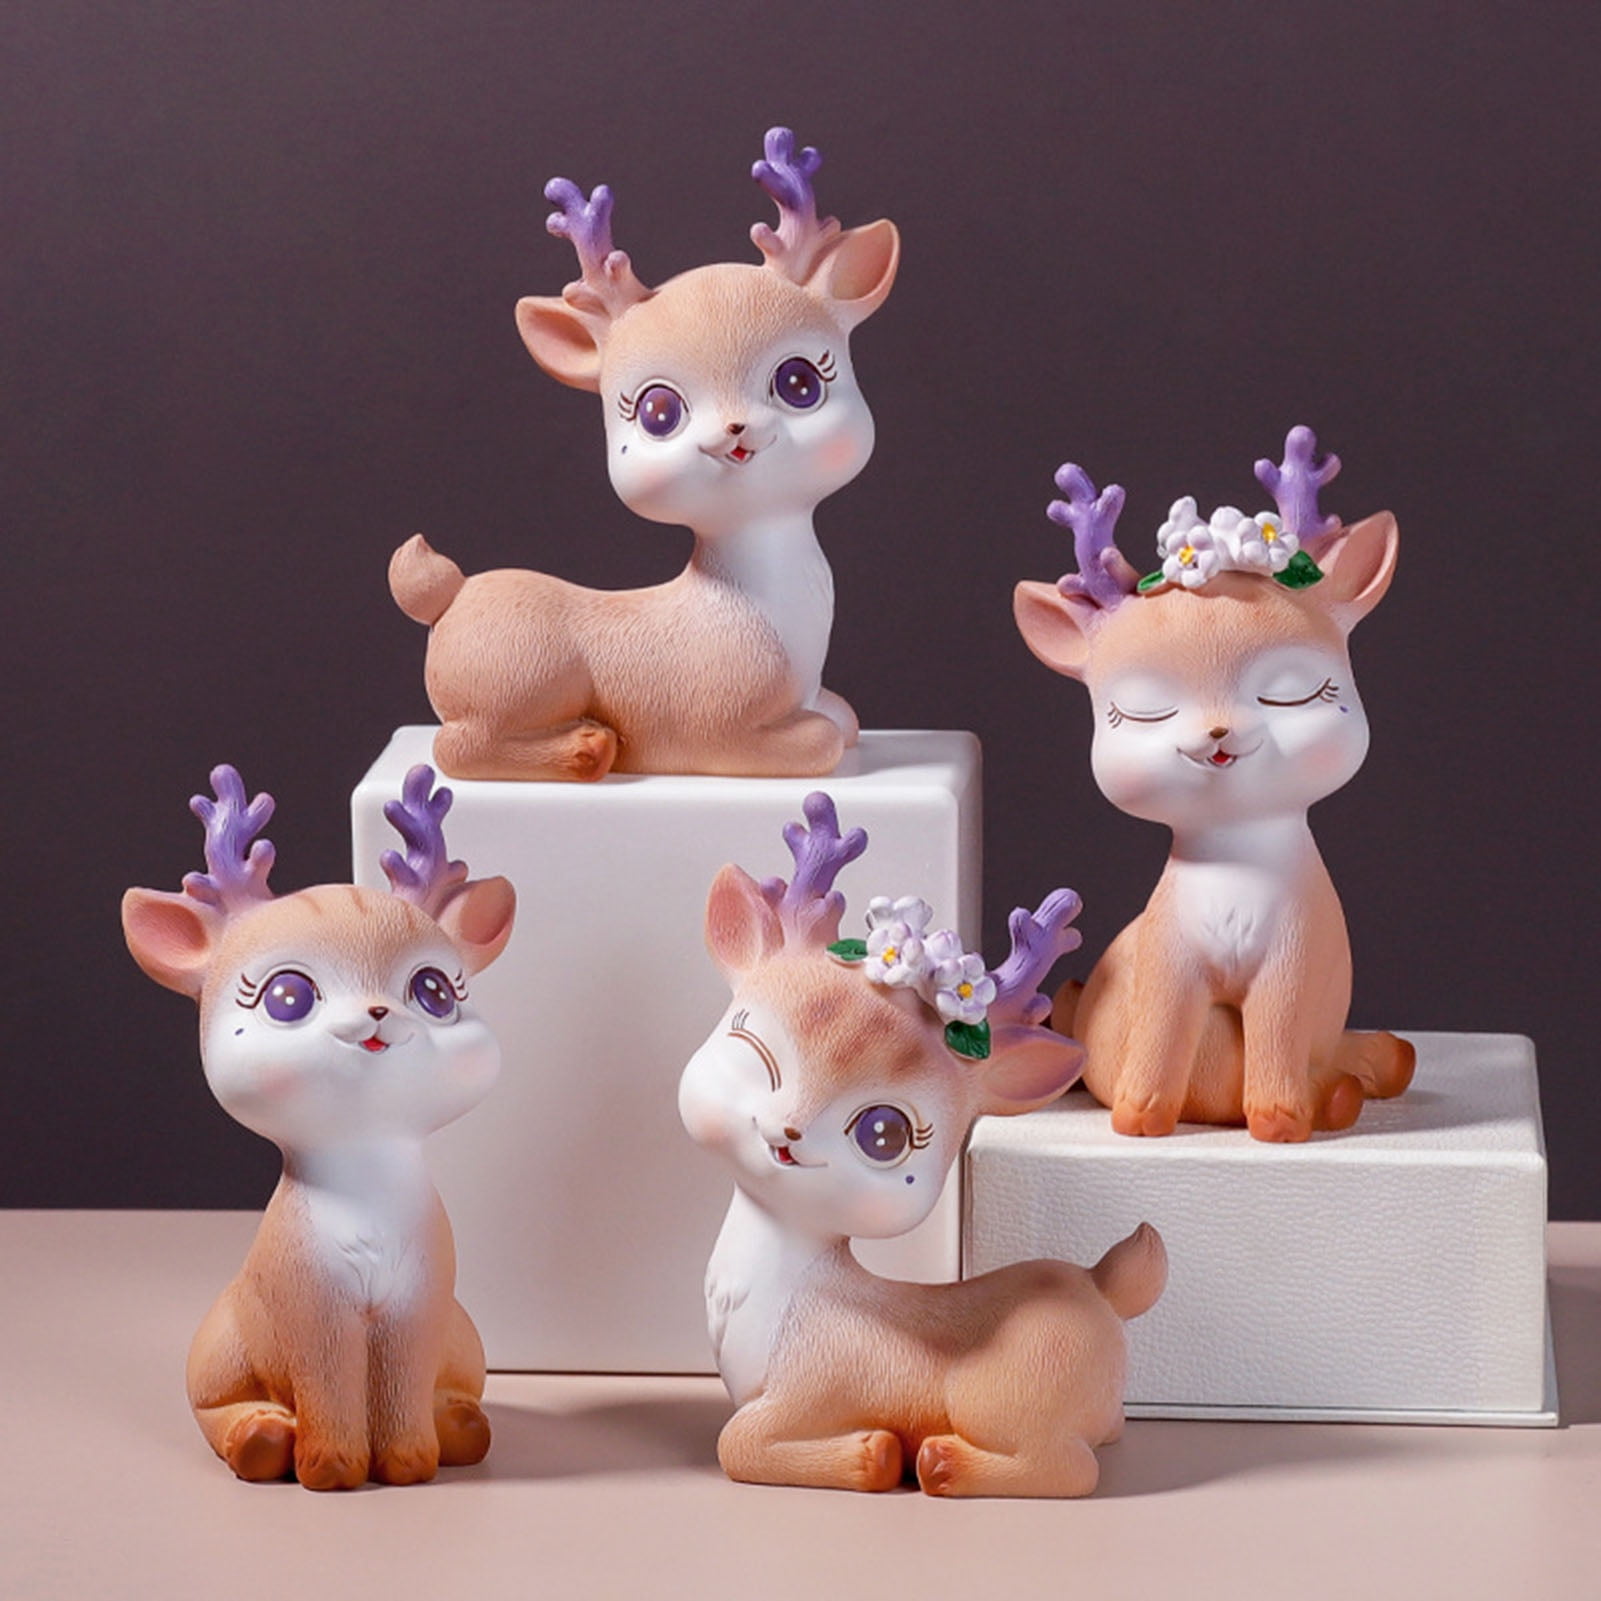 Sika Deer Figurine Animal Figurine sika Deer Toy Cake Decoration Birthday Gift Party Decoration 6 Deer Figurine Toys